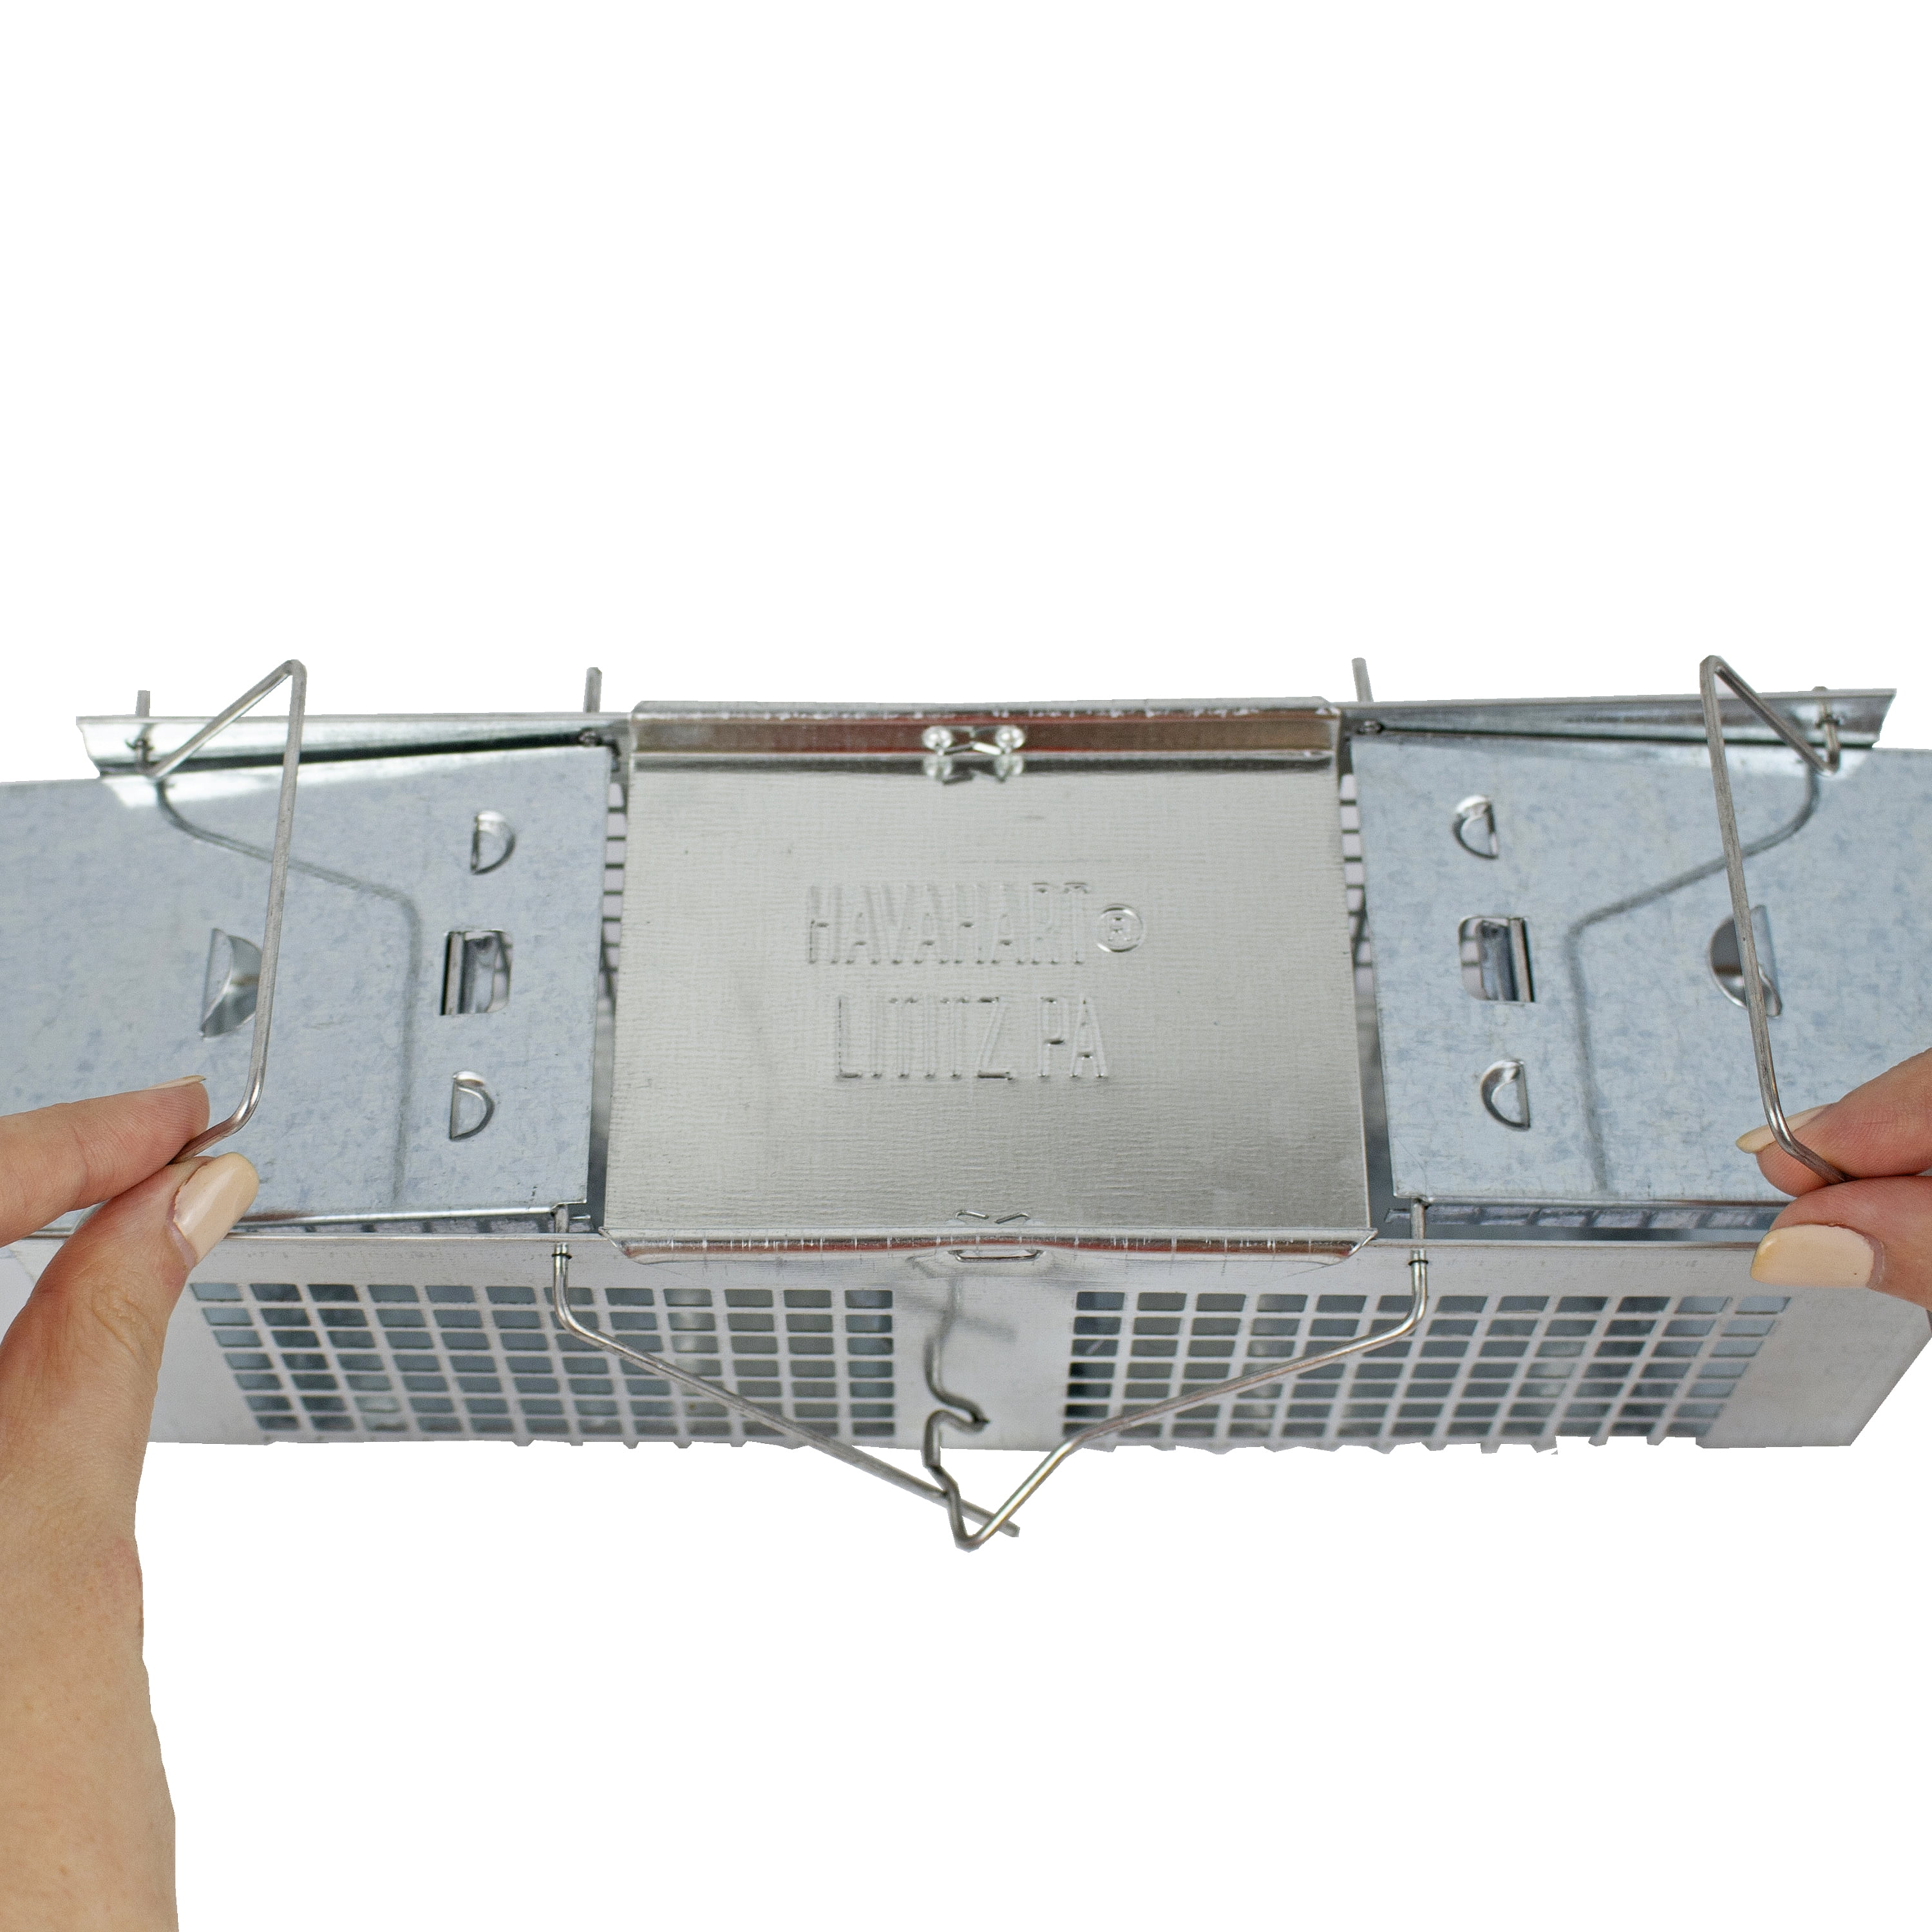 How to Set: Havahart® X-Small 2-Door Trap Model #1020 for Mice & Shrew 